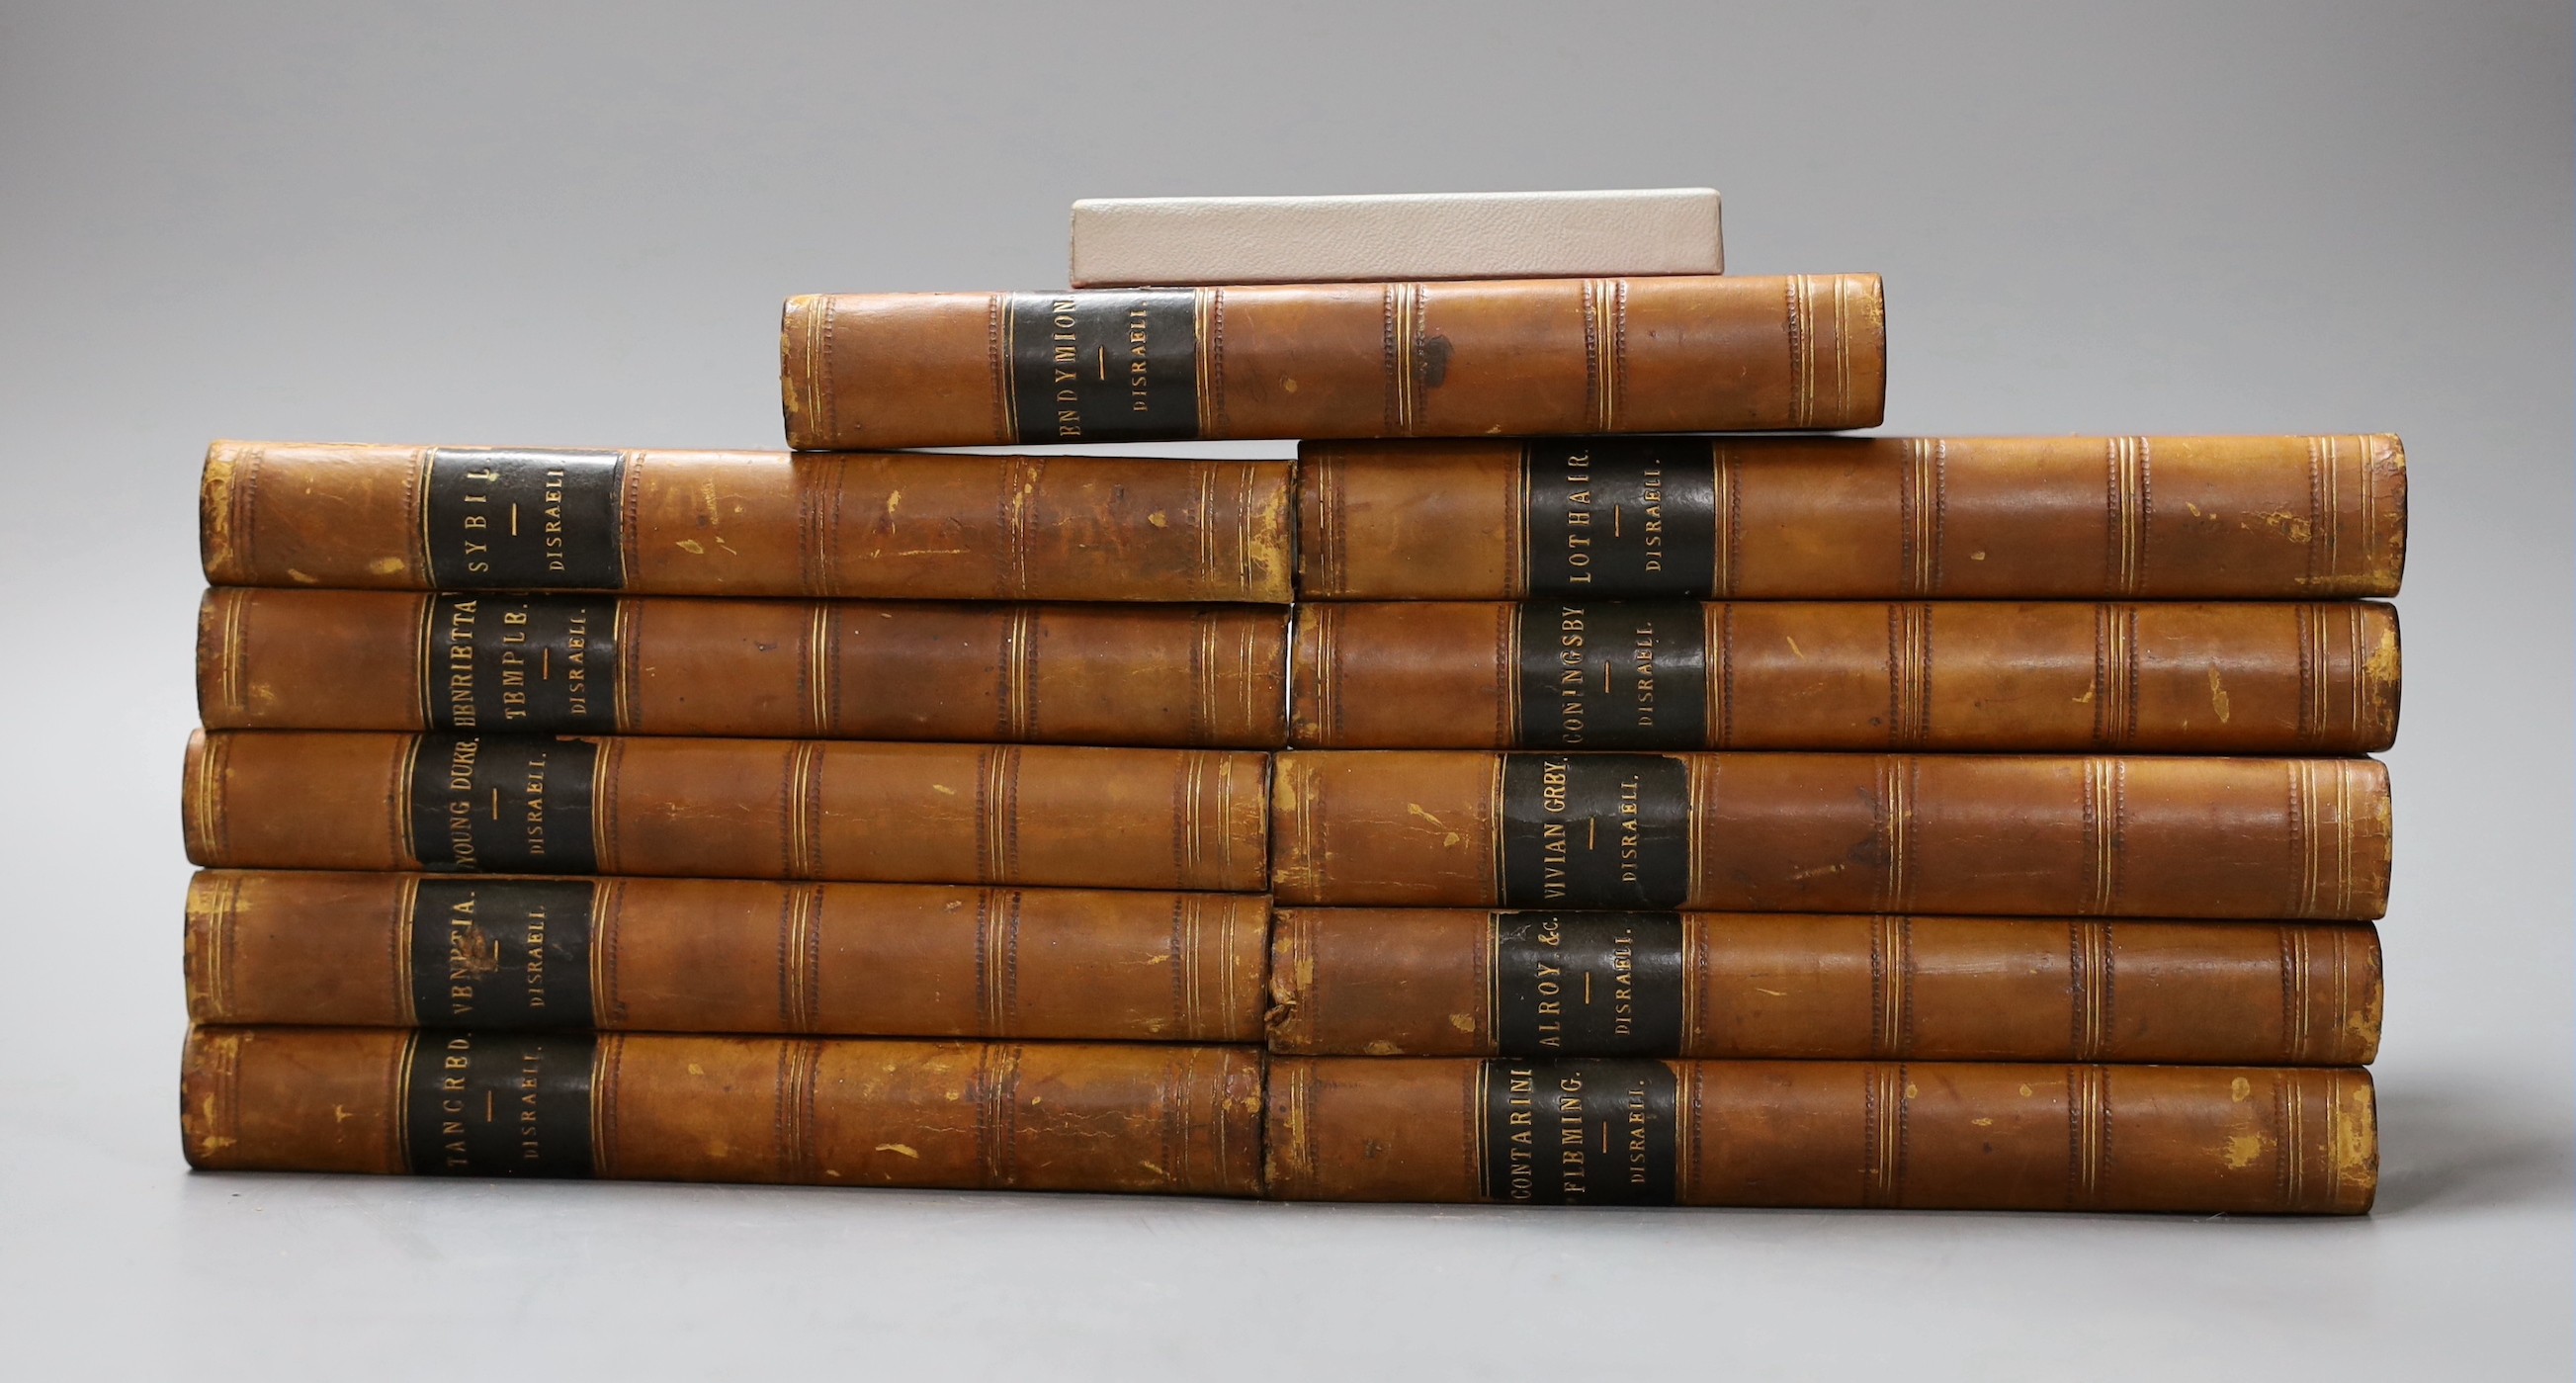 Disraeli, Benjamin - (The Novels, Cabinet Edition), 11 vols., contemp. gilt ruled calf, marbled e/ps and edges, sm. 8vo. (ca.1885)